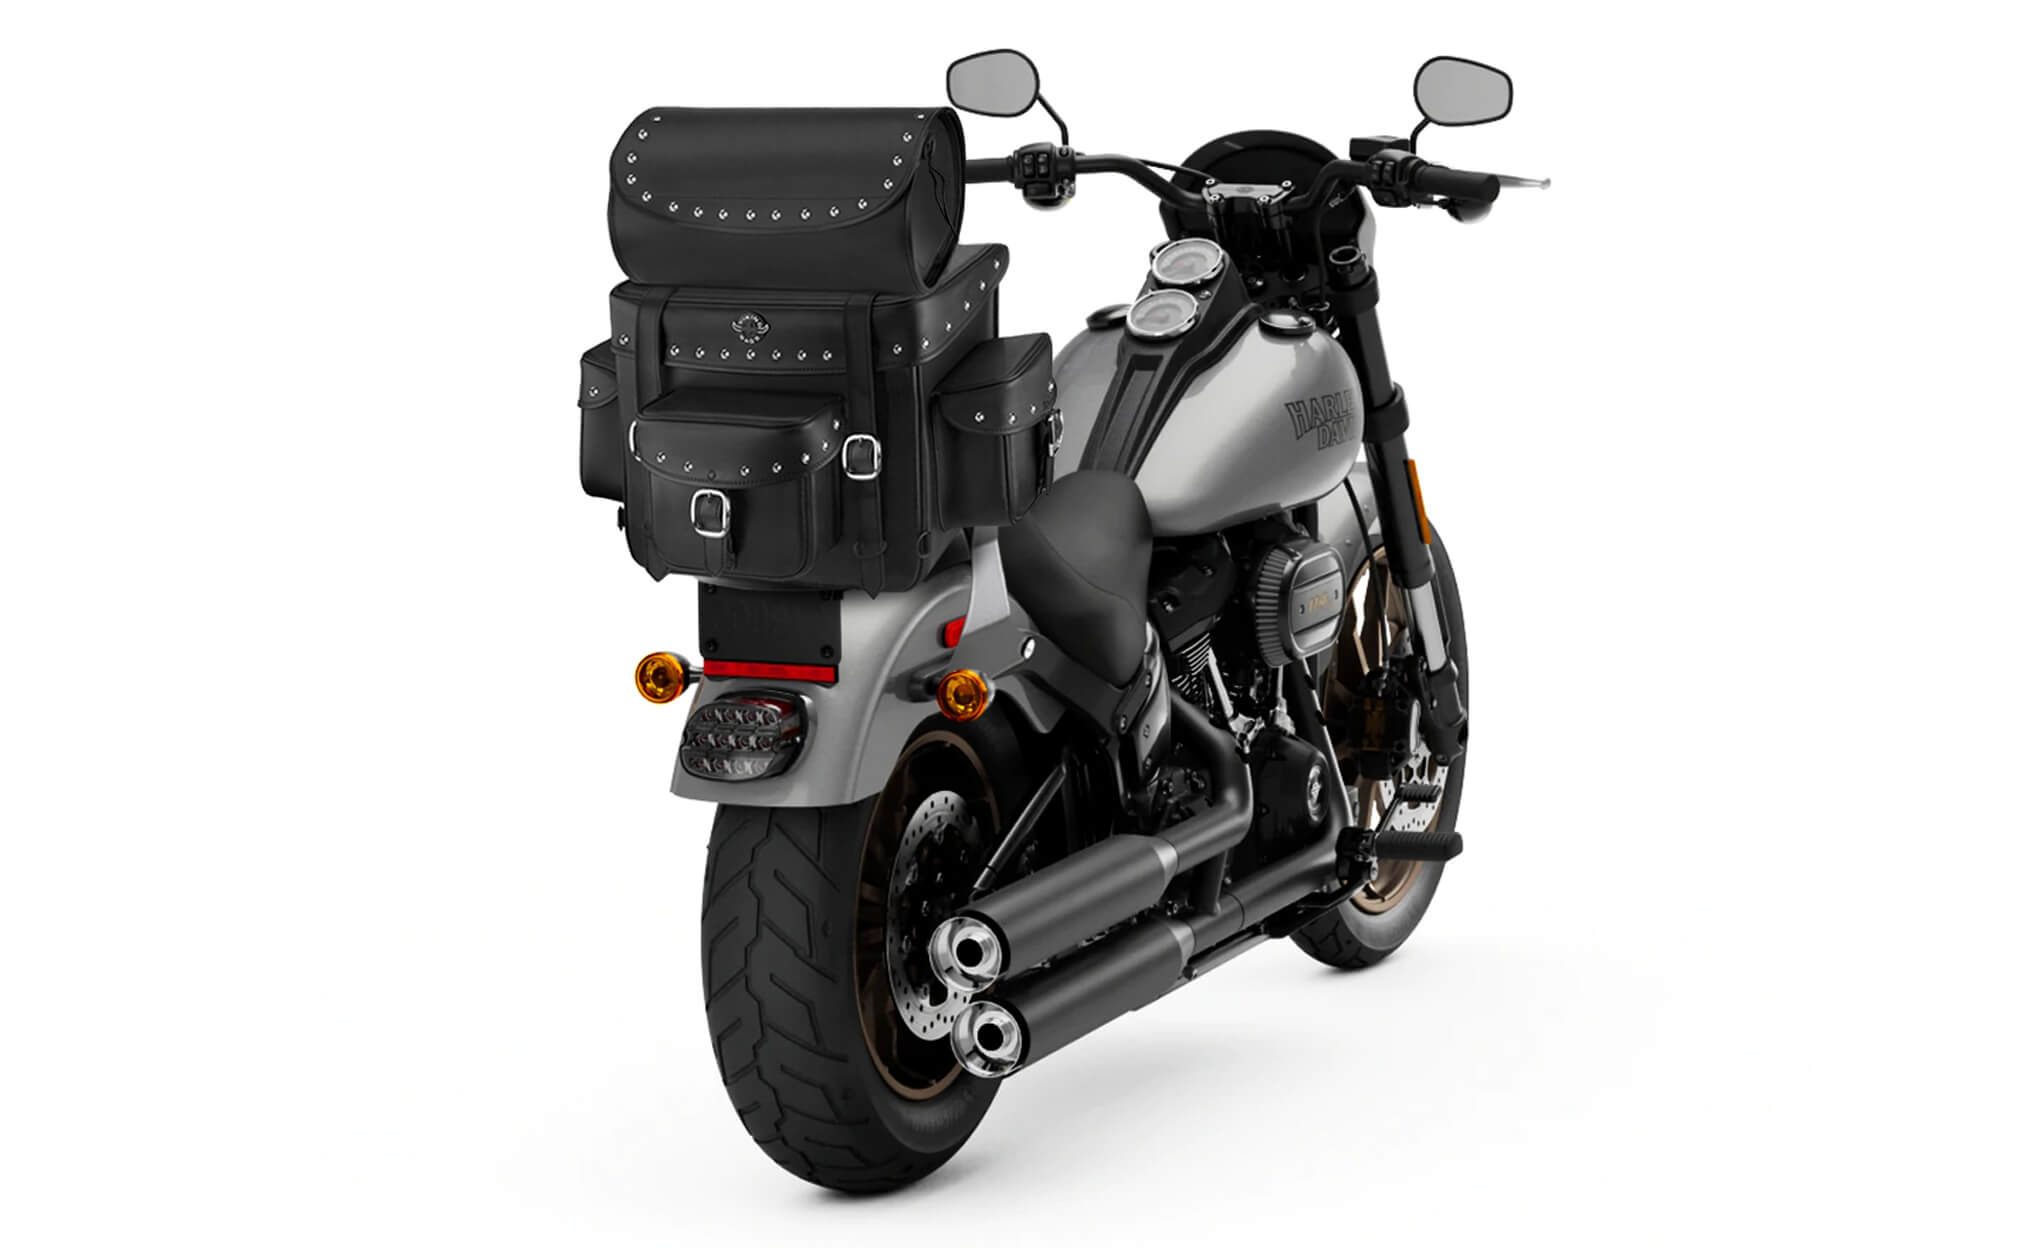 Viking Revival Series Large Kawasaki Studded Motorcycle Sissy Bar Bag Bag on Bike View @expand